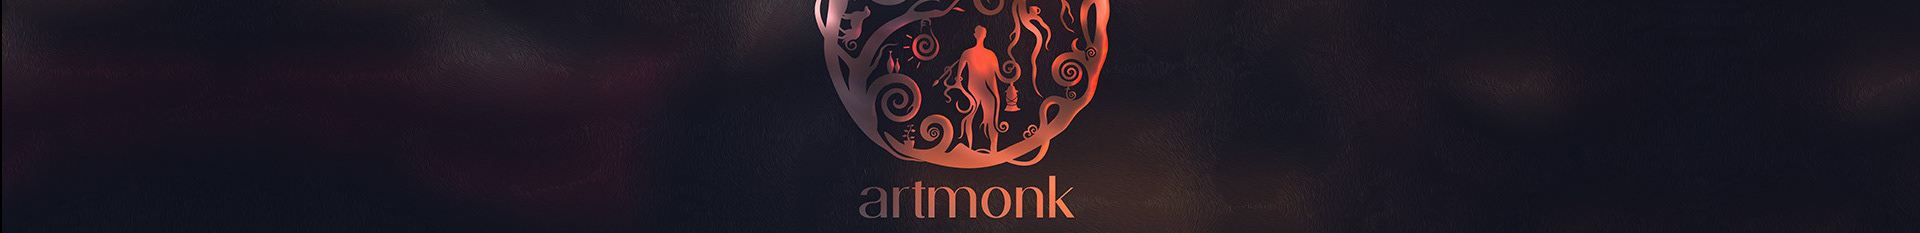 Artmonk Designss profilbanner